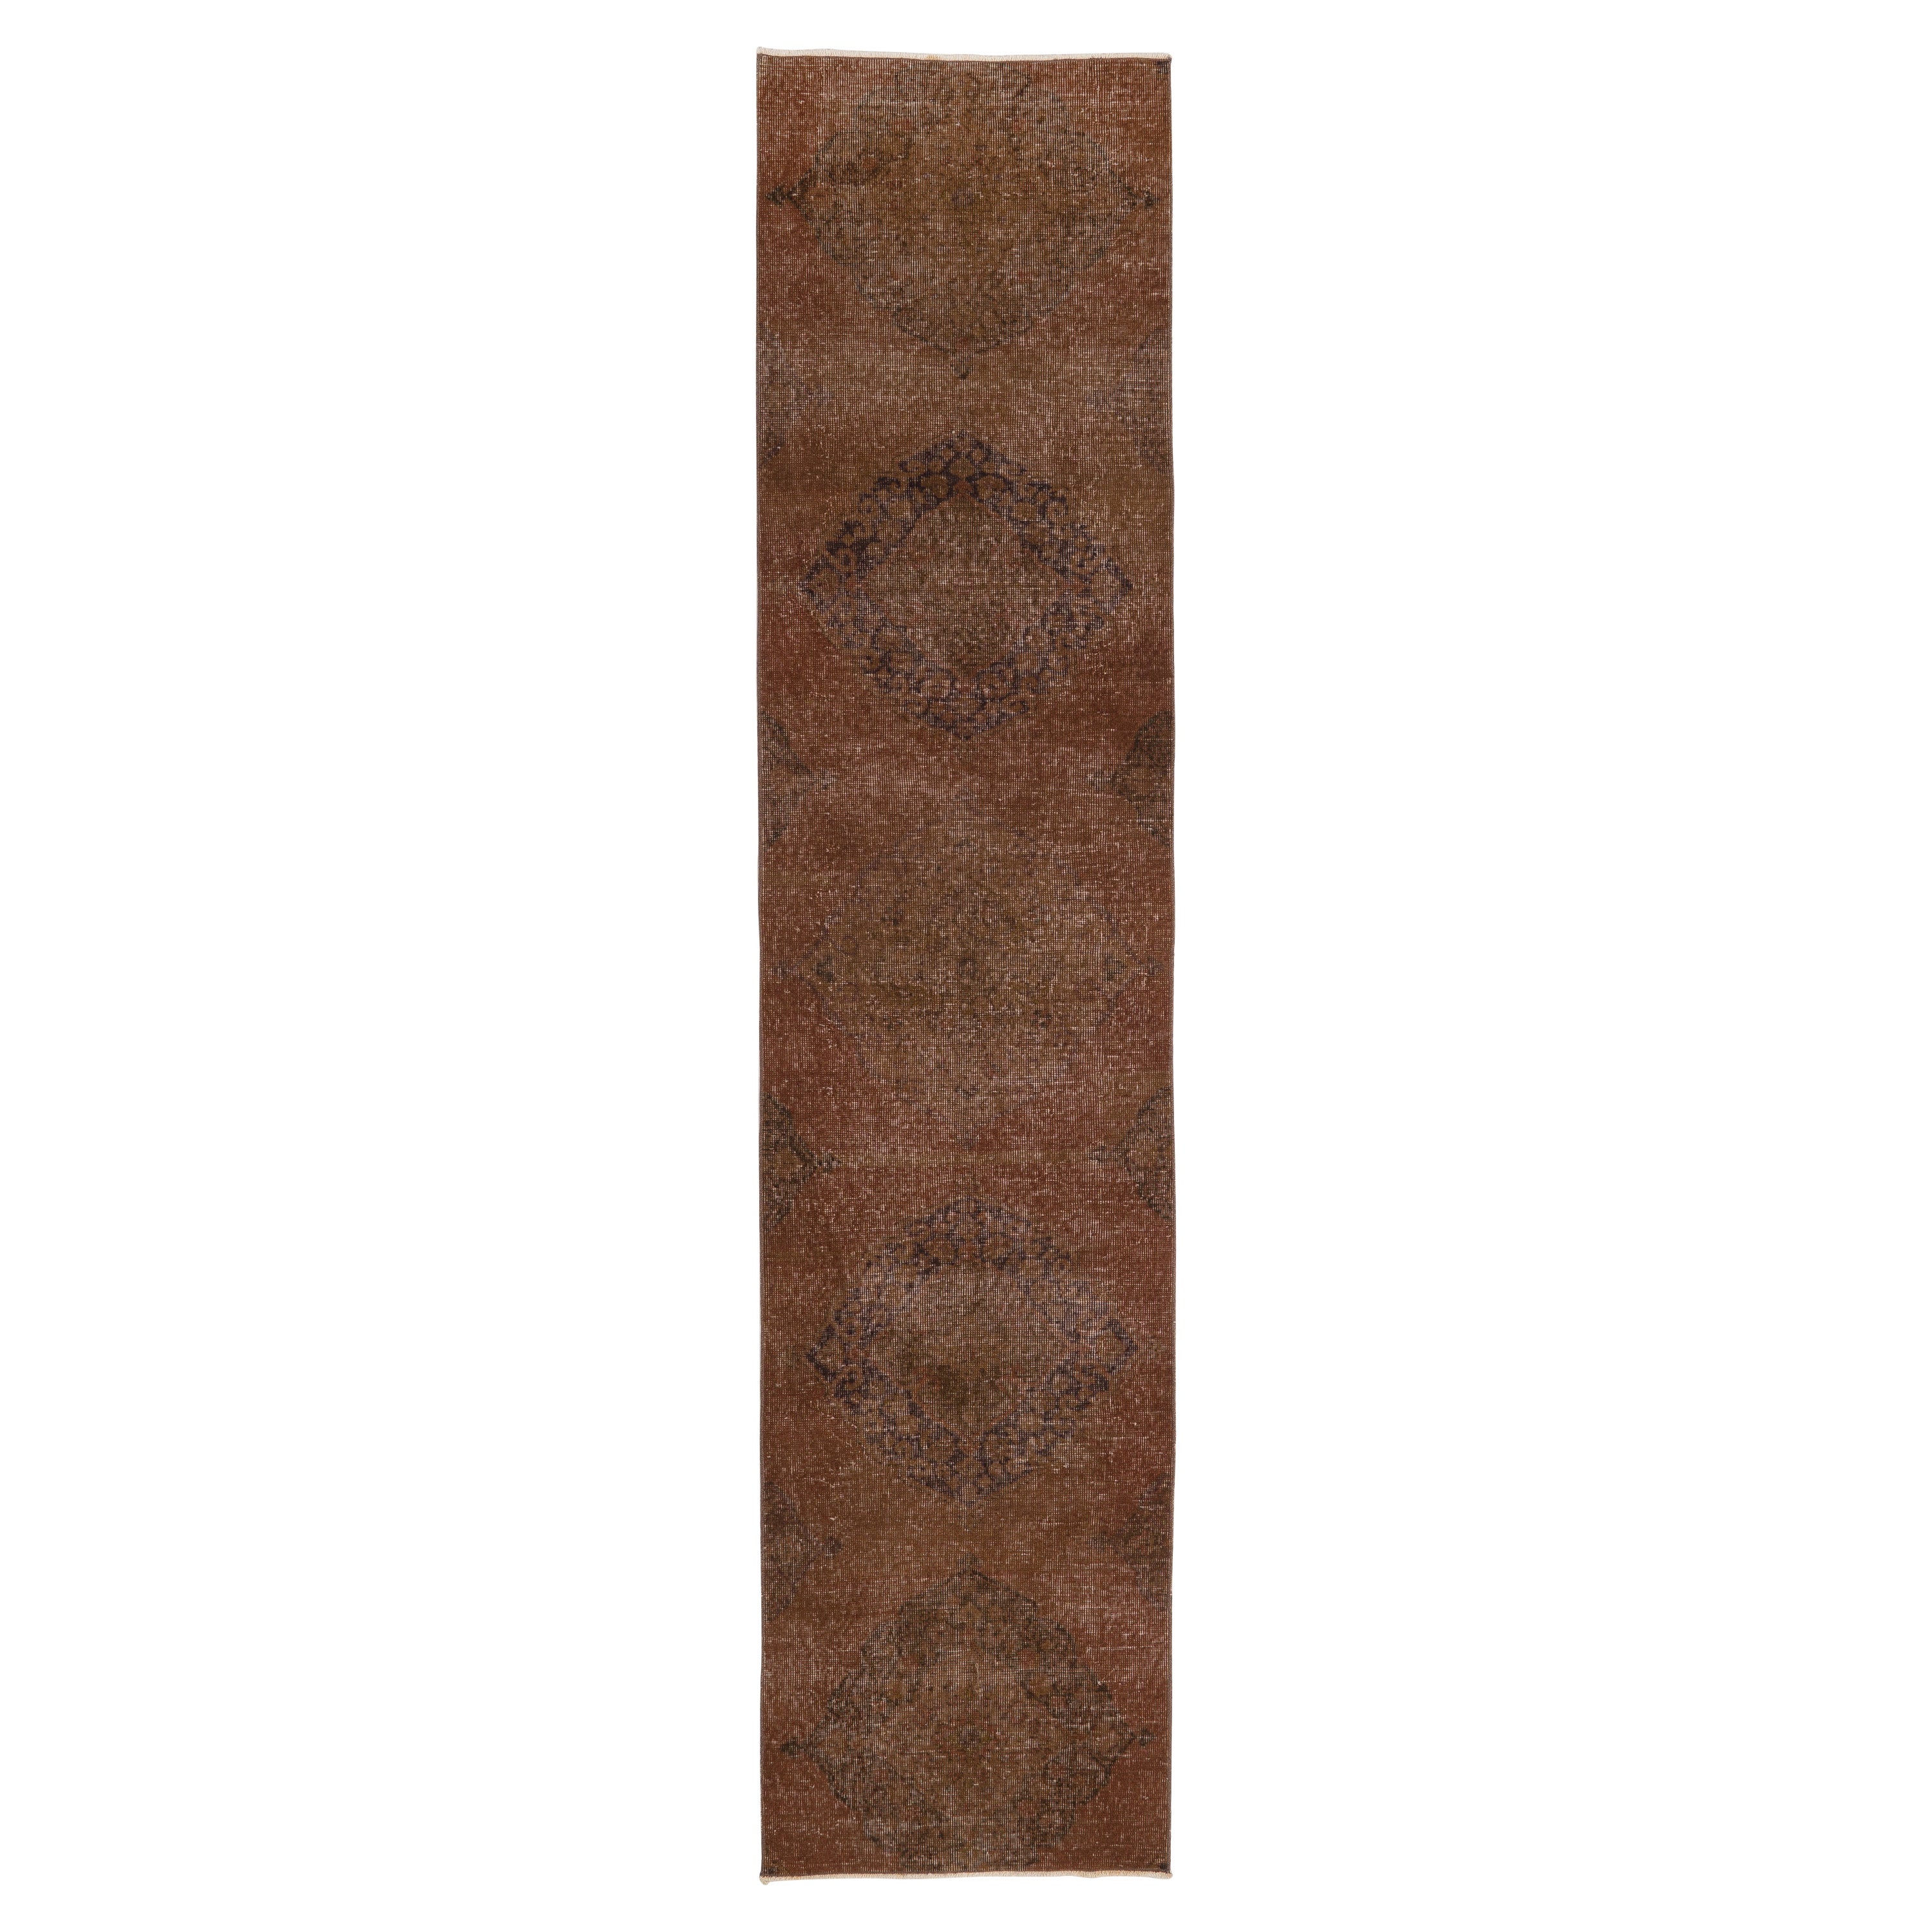 2.5x11 ft Brown Runner Rug for Hallway Decor, Turkish Handmade Corridor Carpet